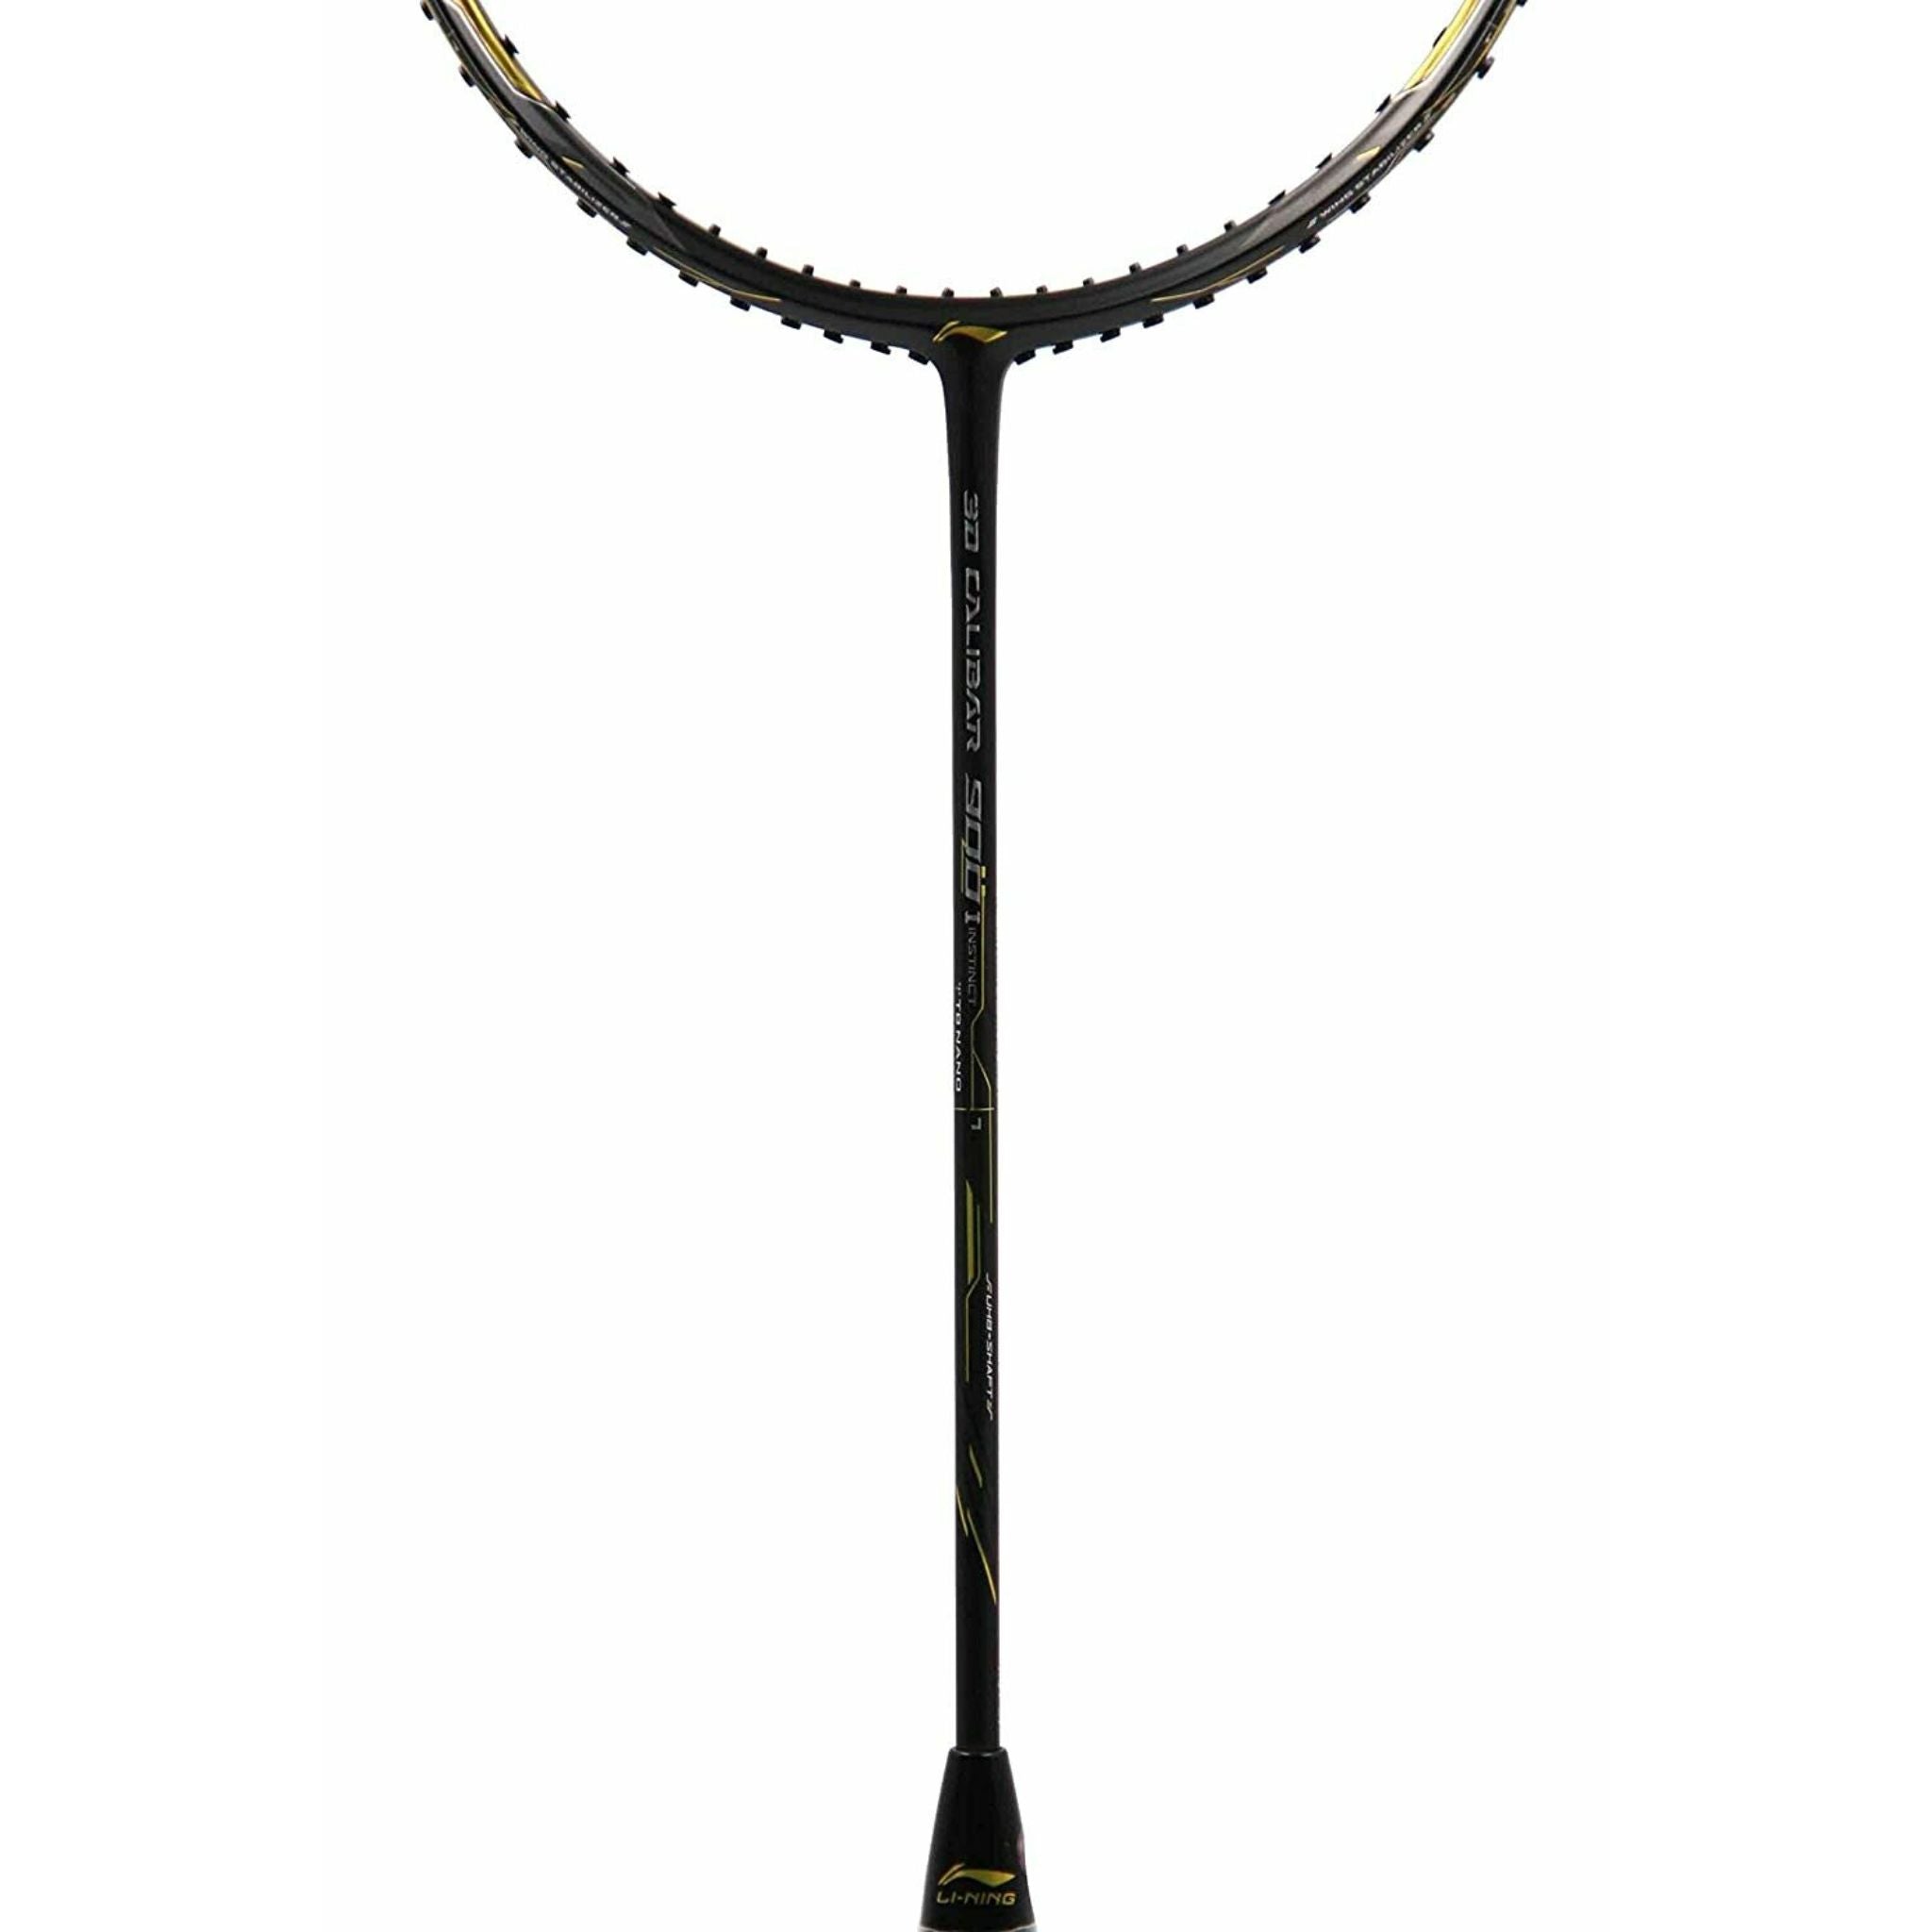 LI-NING 3d Calibar 900 Instinct Badminton Racket